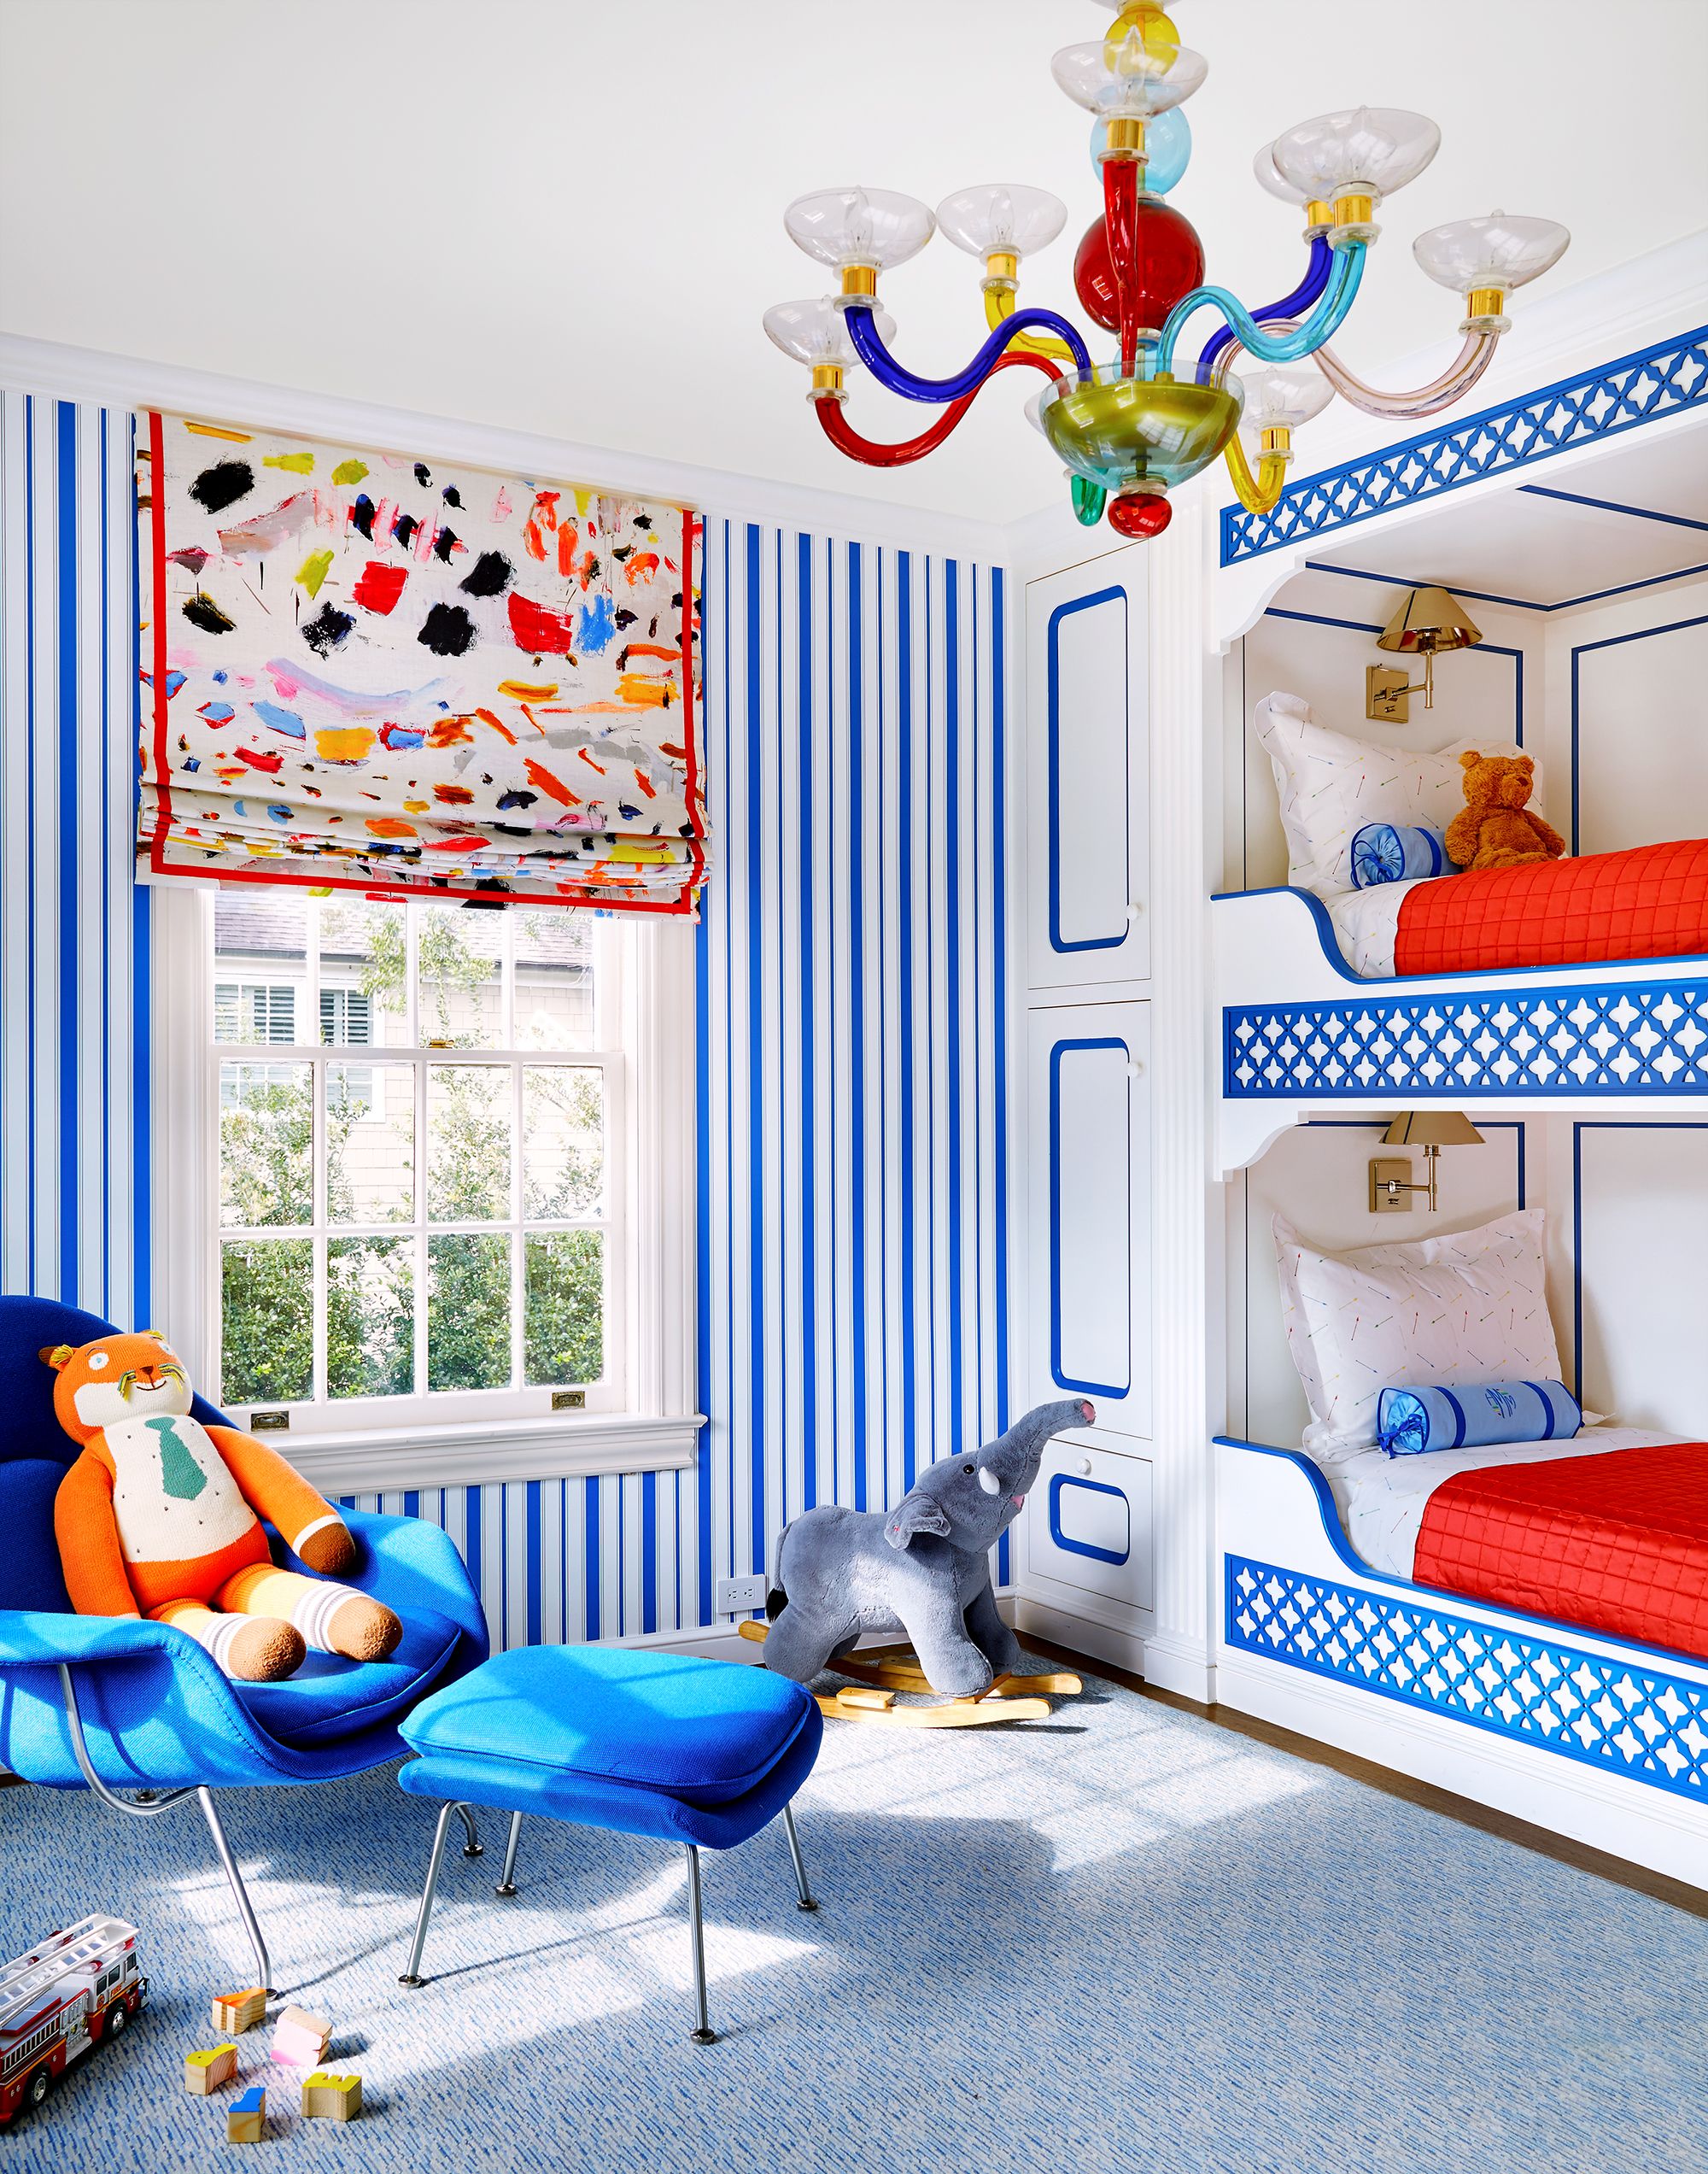 Design Ideas Cool Kids Bedroom Decor, Decorating Ideas For Kids Bedrooms